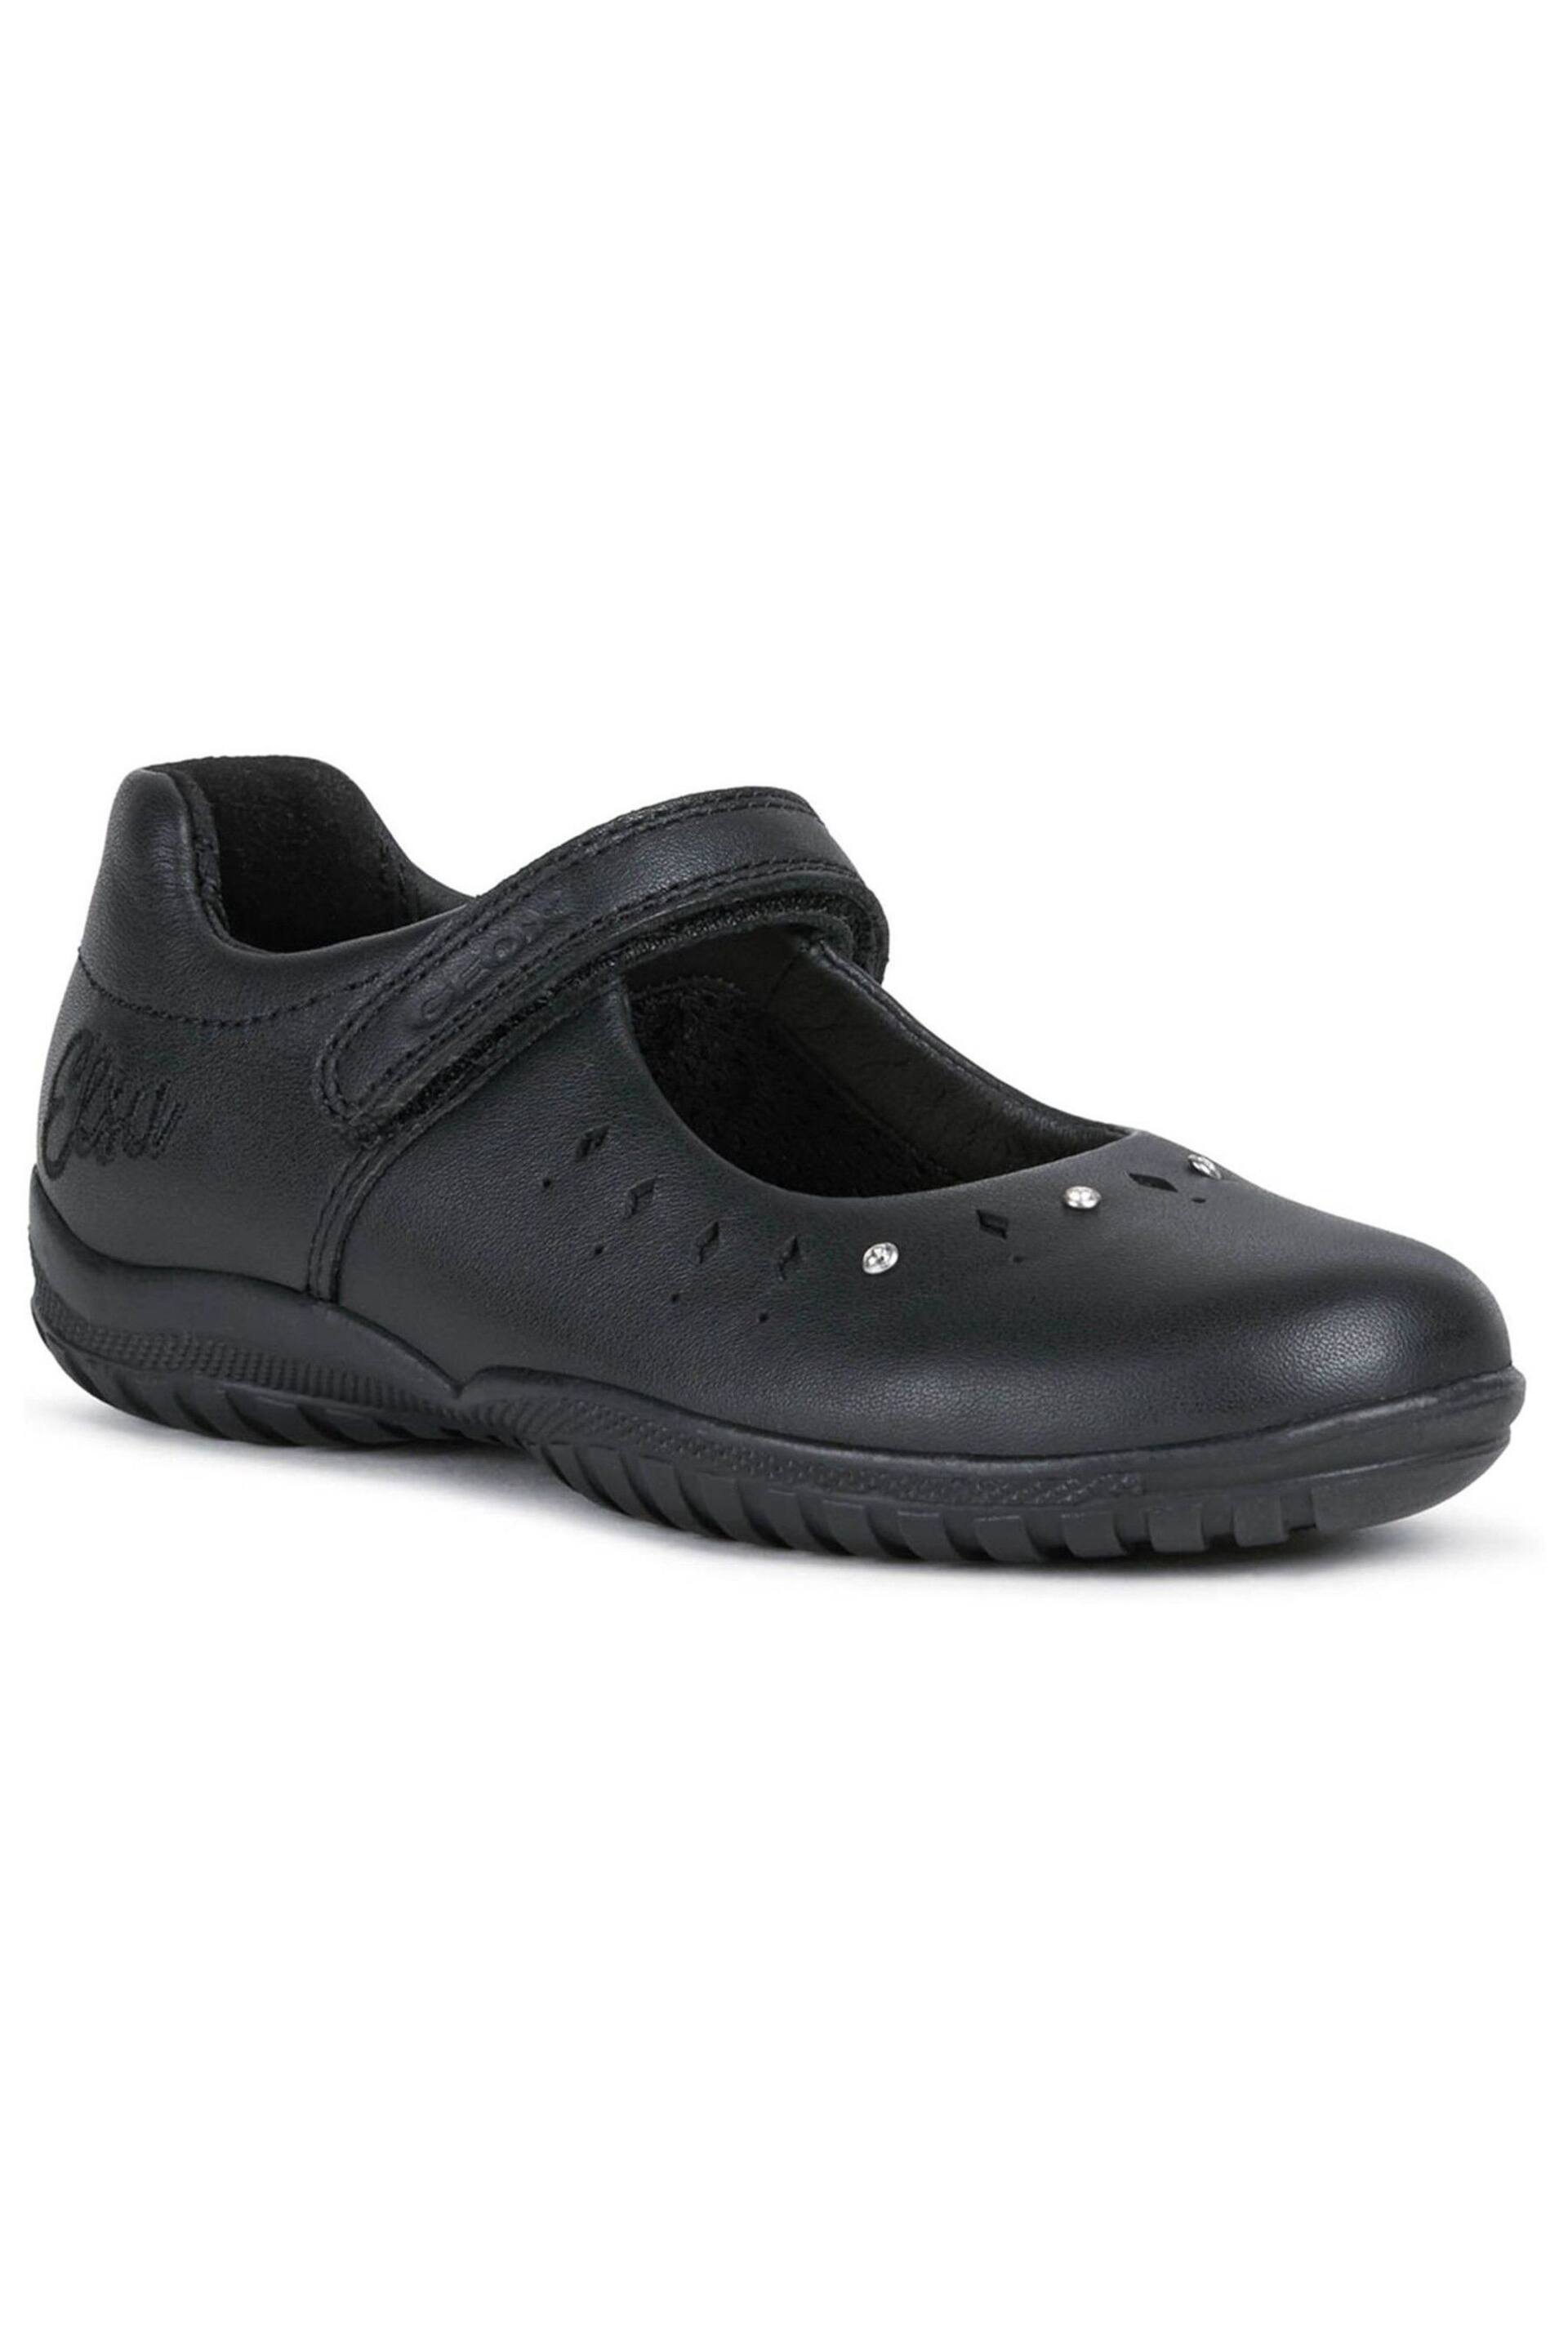 Geox Black  Jr Shadow B Shoes - Image 2 of 5